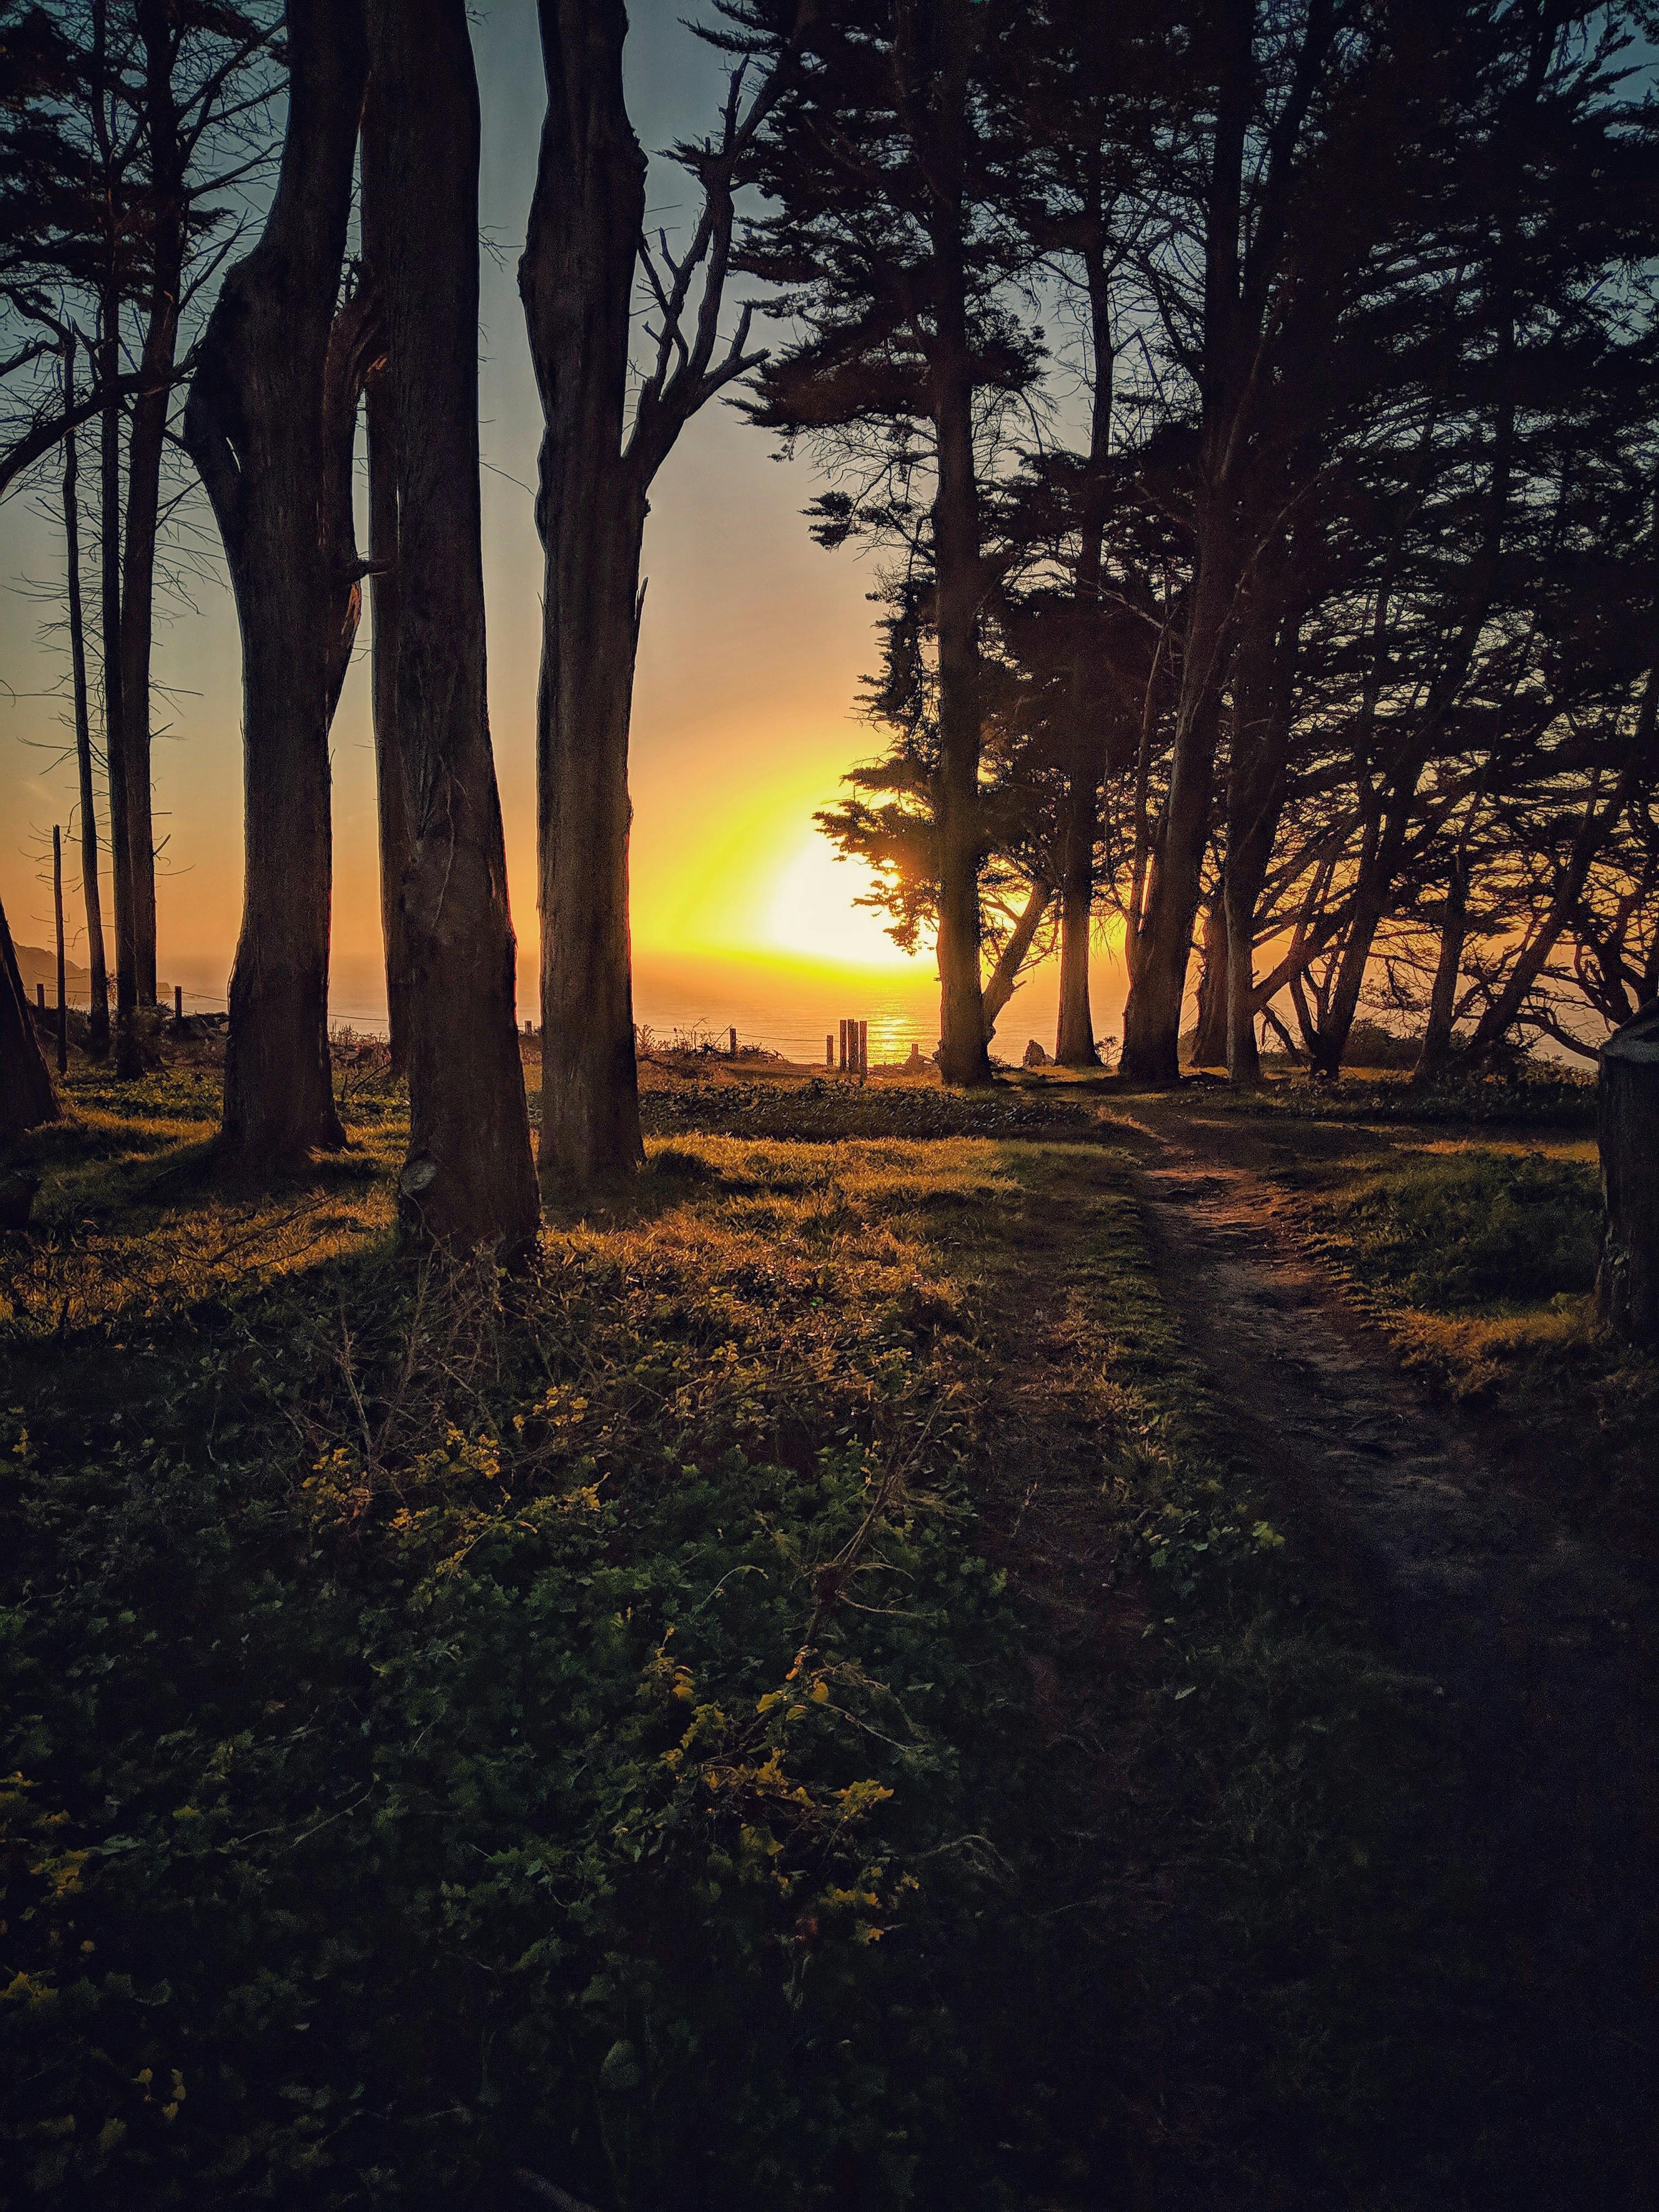 A sunset seen through Coastal Cypress trees in San Francisco, California